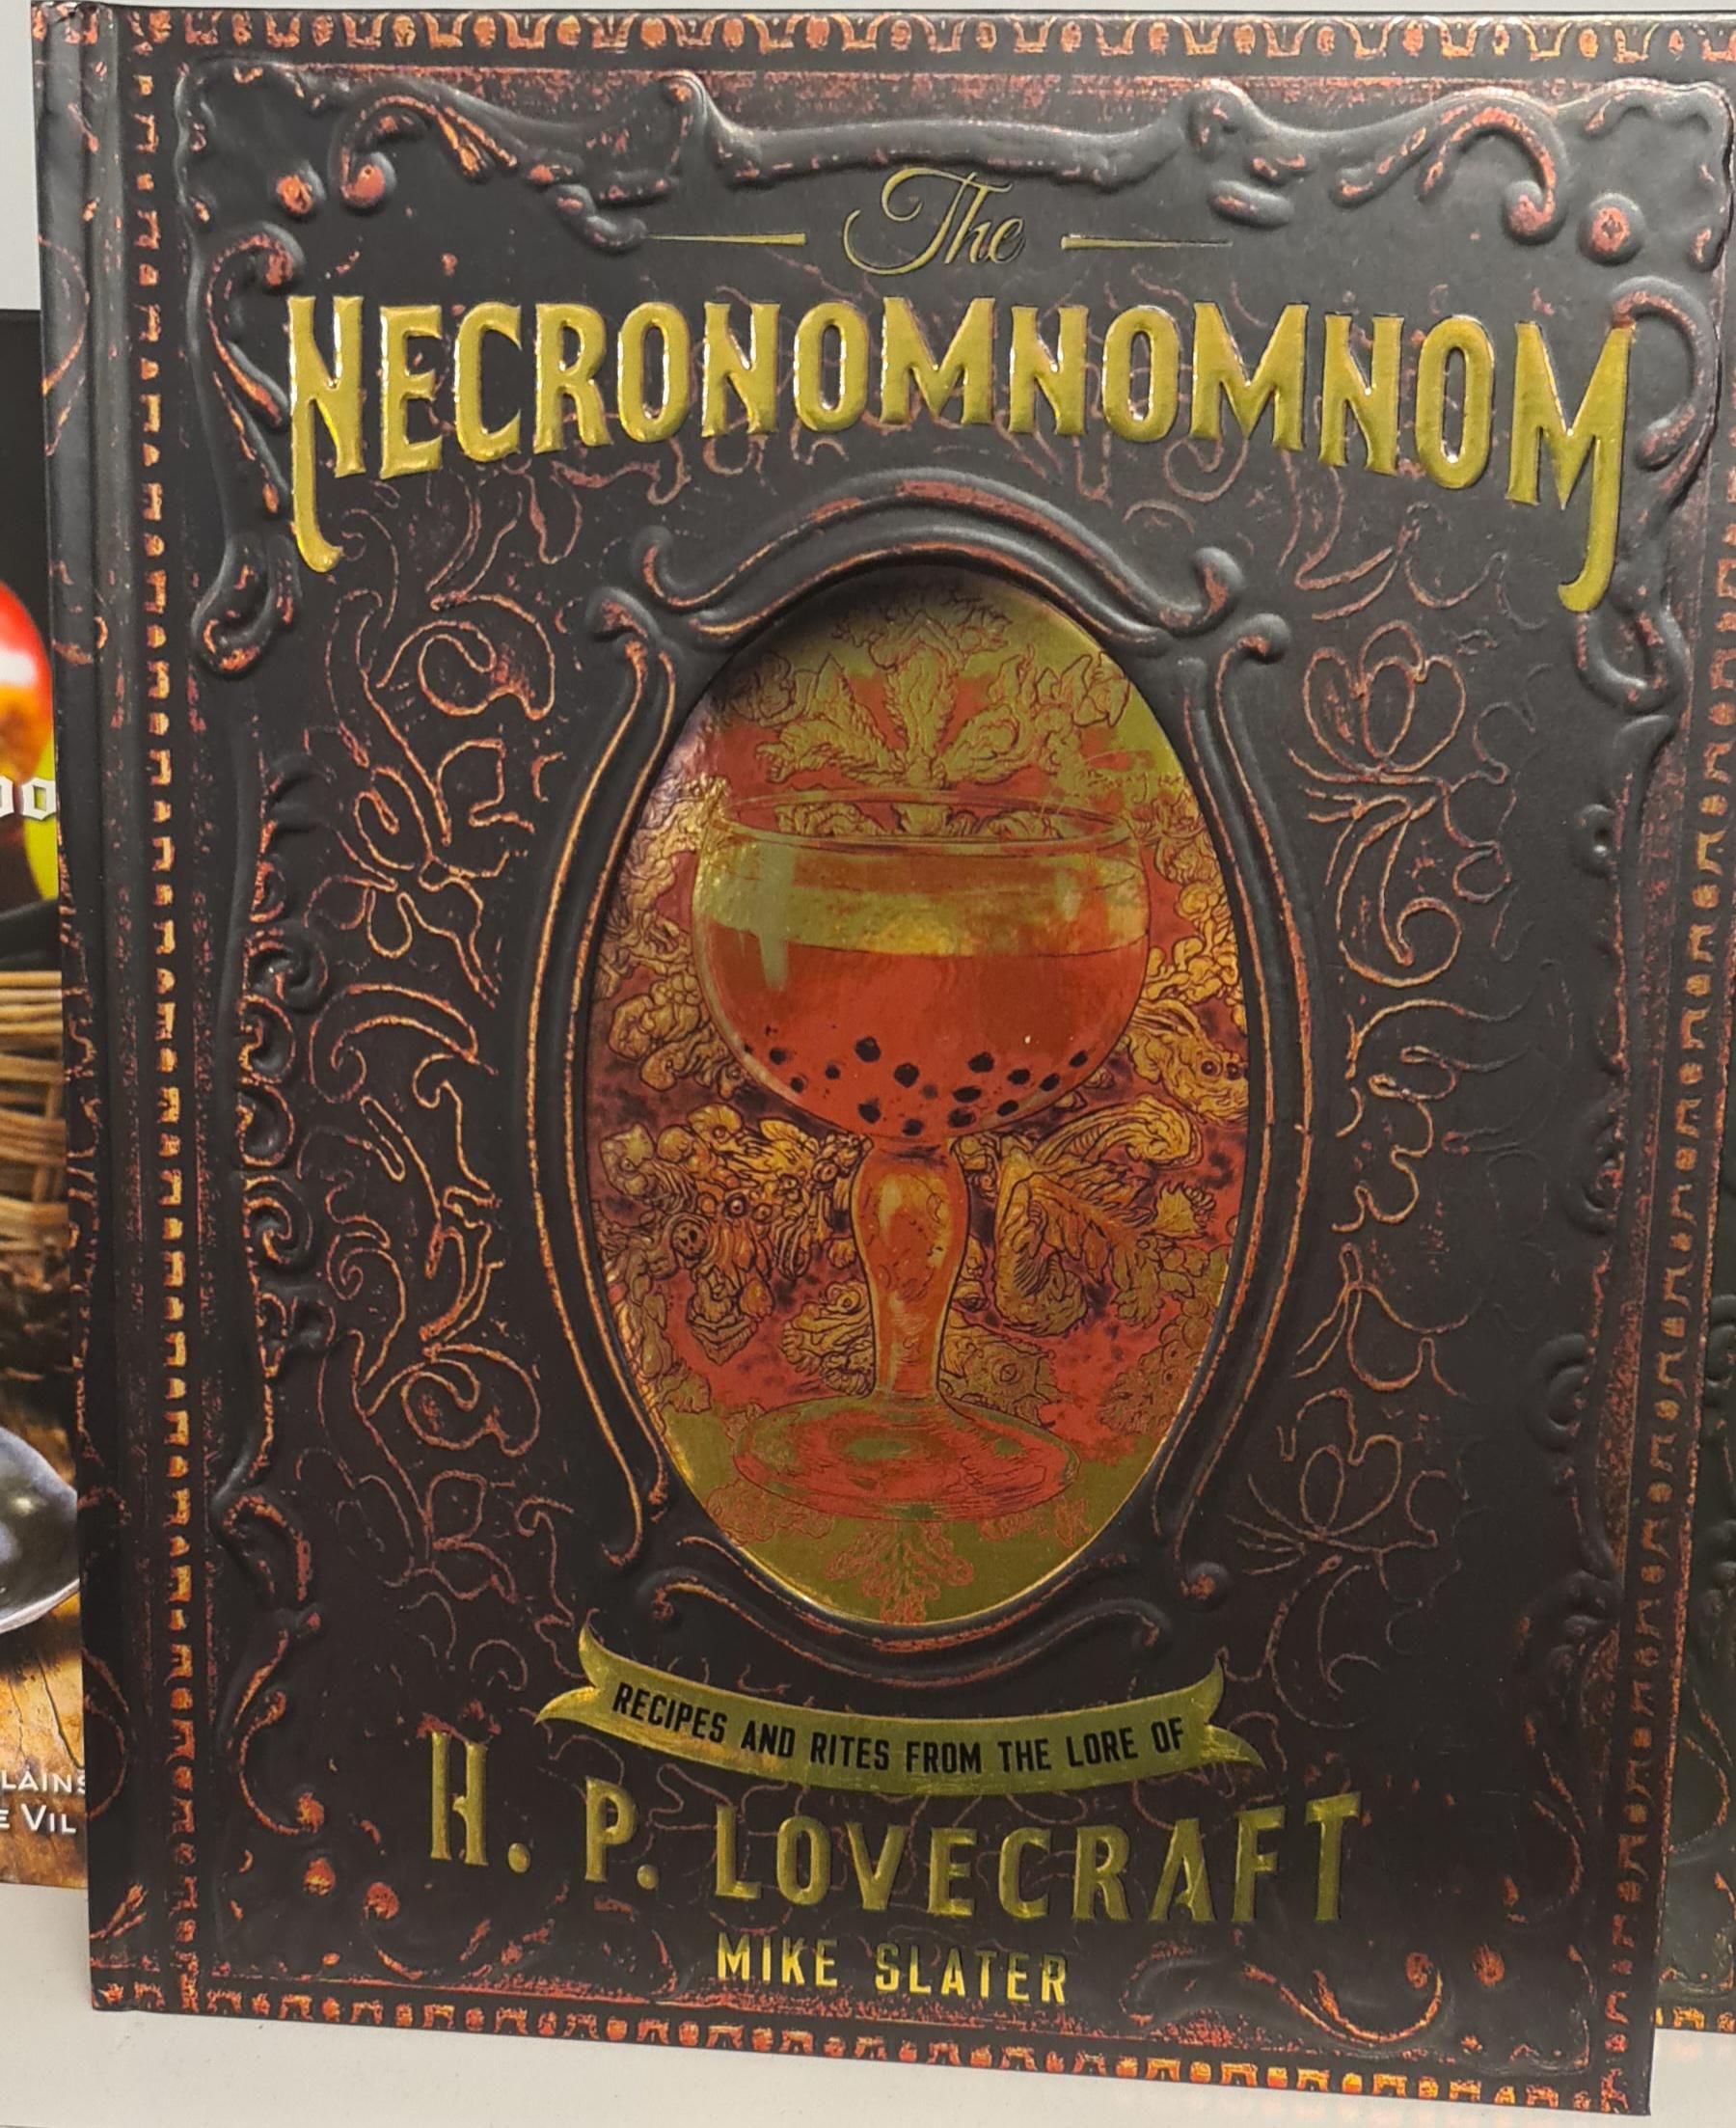 Just found a H.P. Lovecraft cookbook